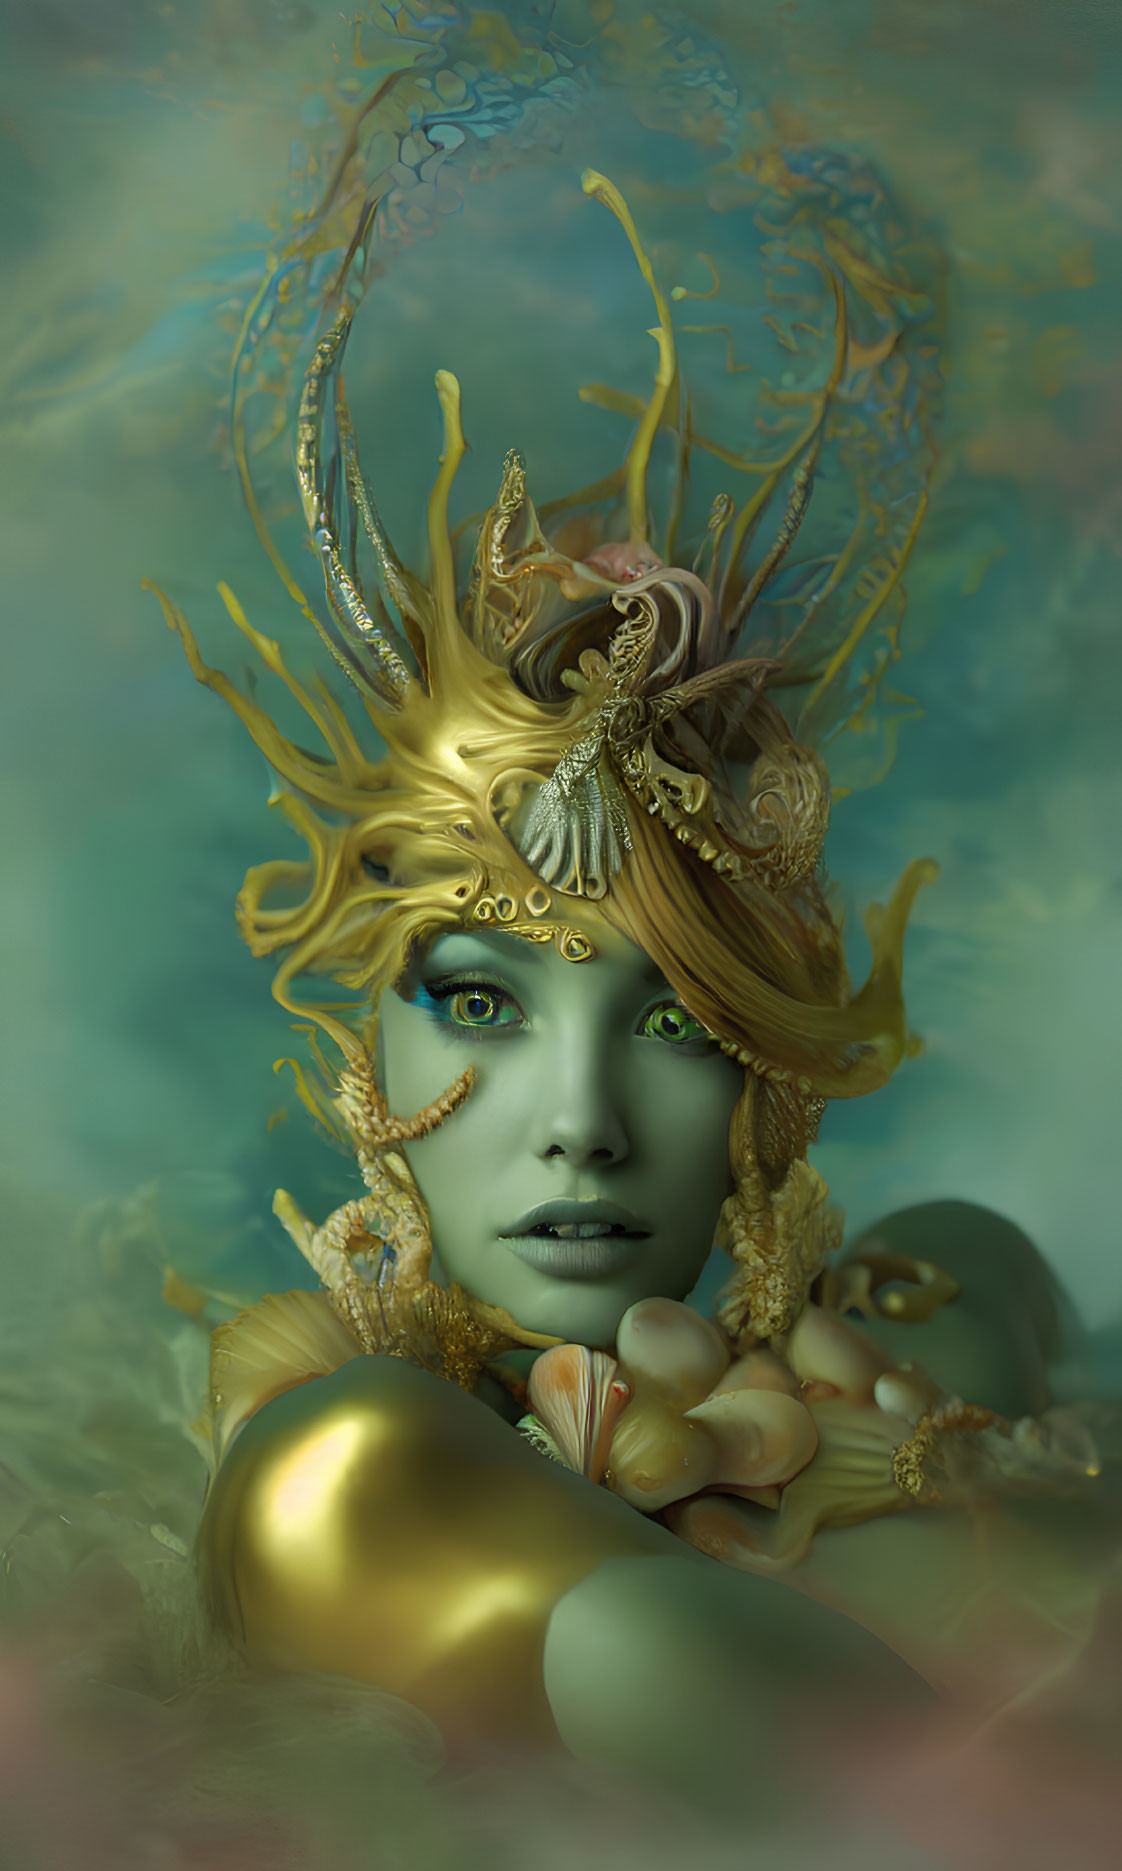 Elaborate Golden Headgear Portrait on Soft Green Background